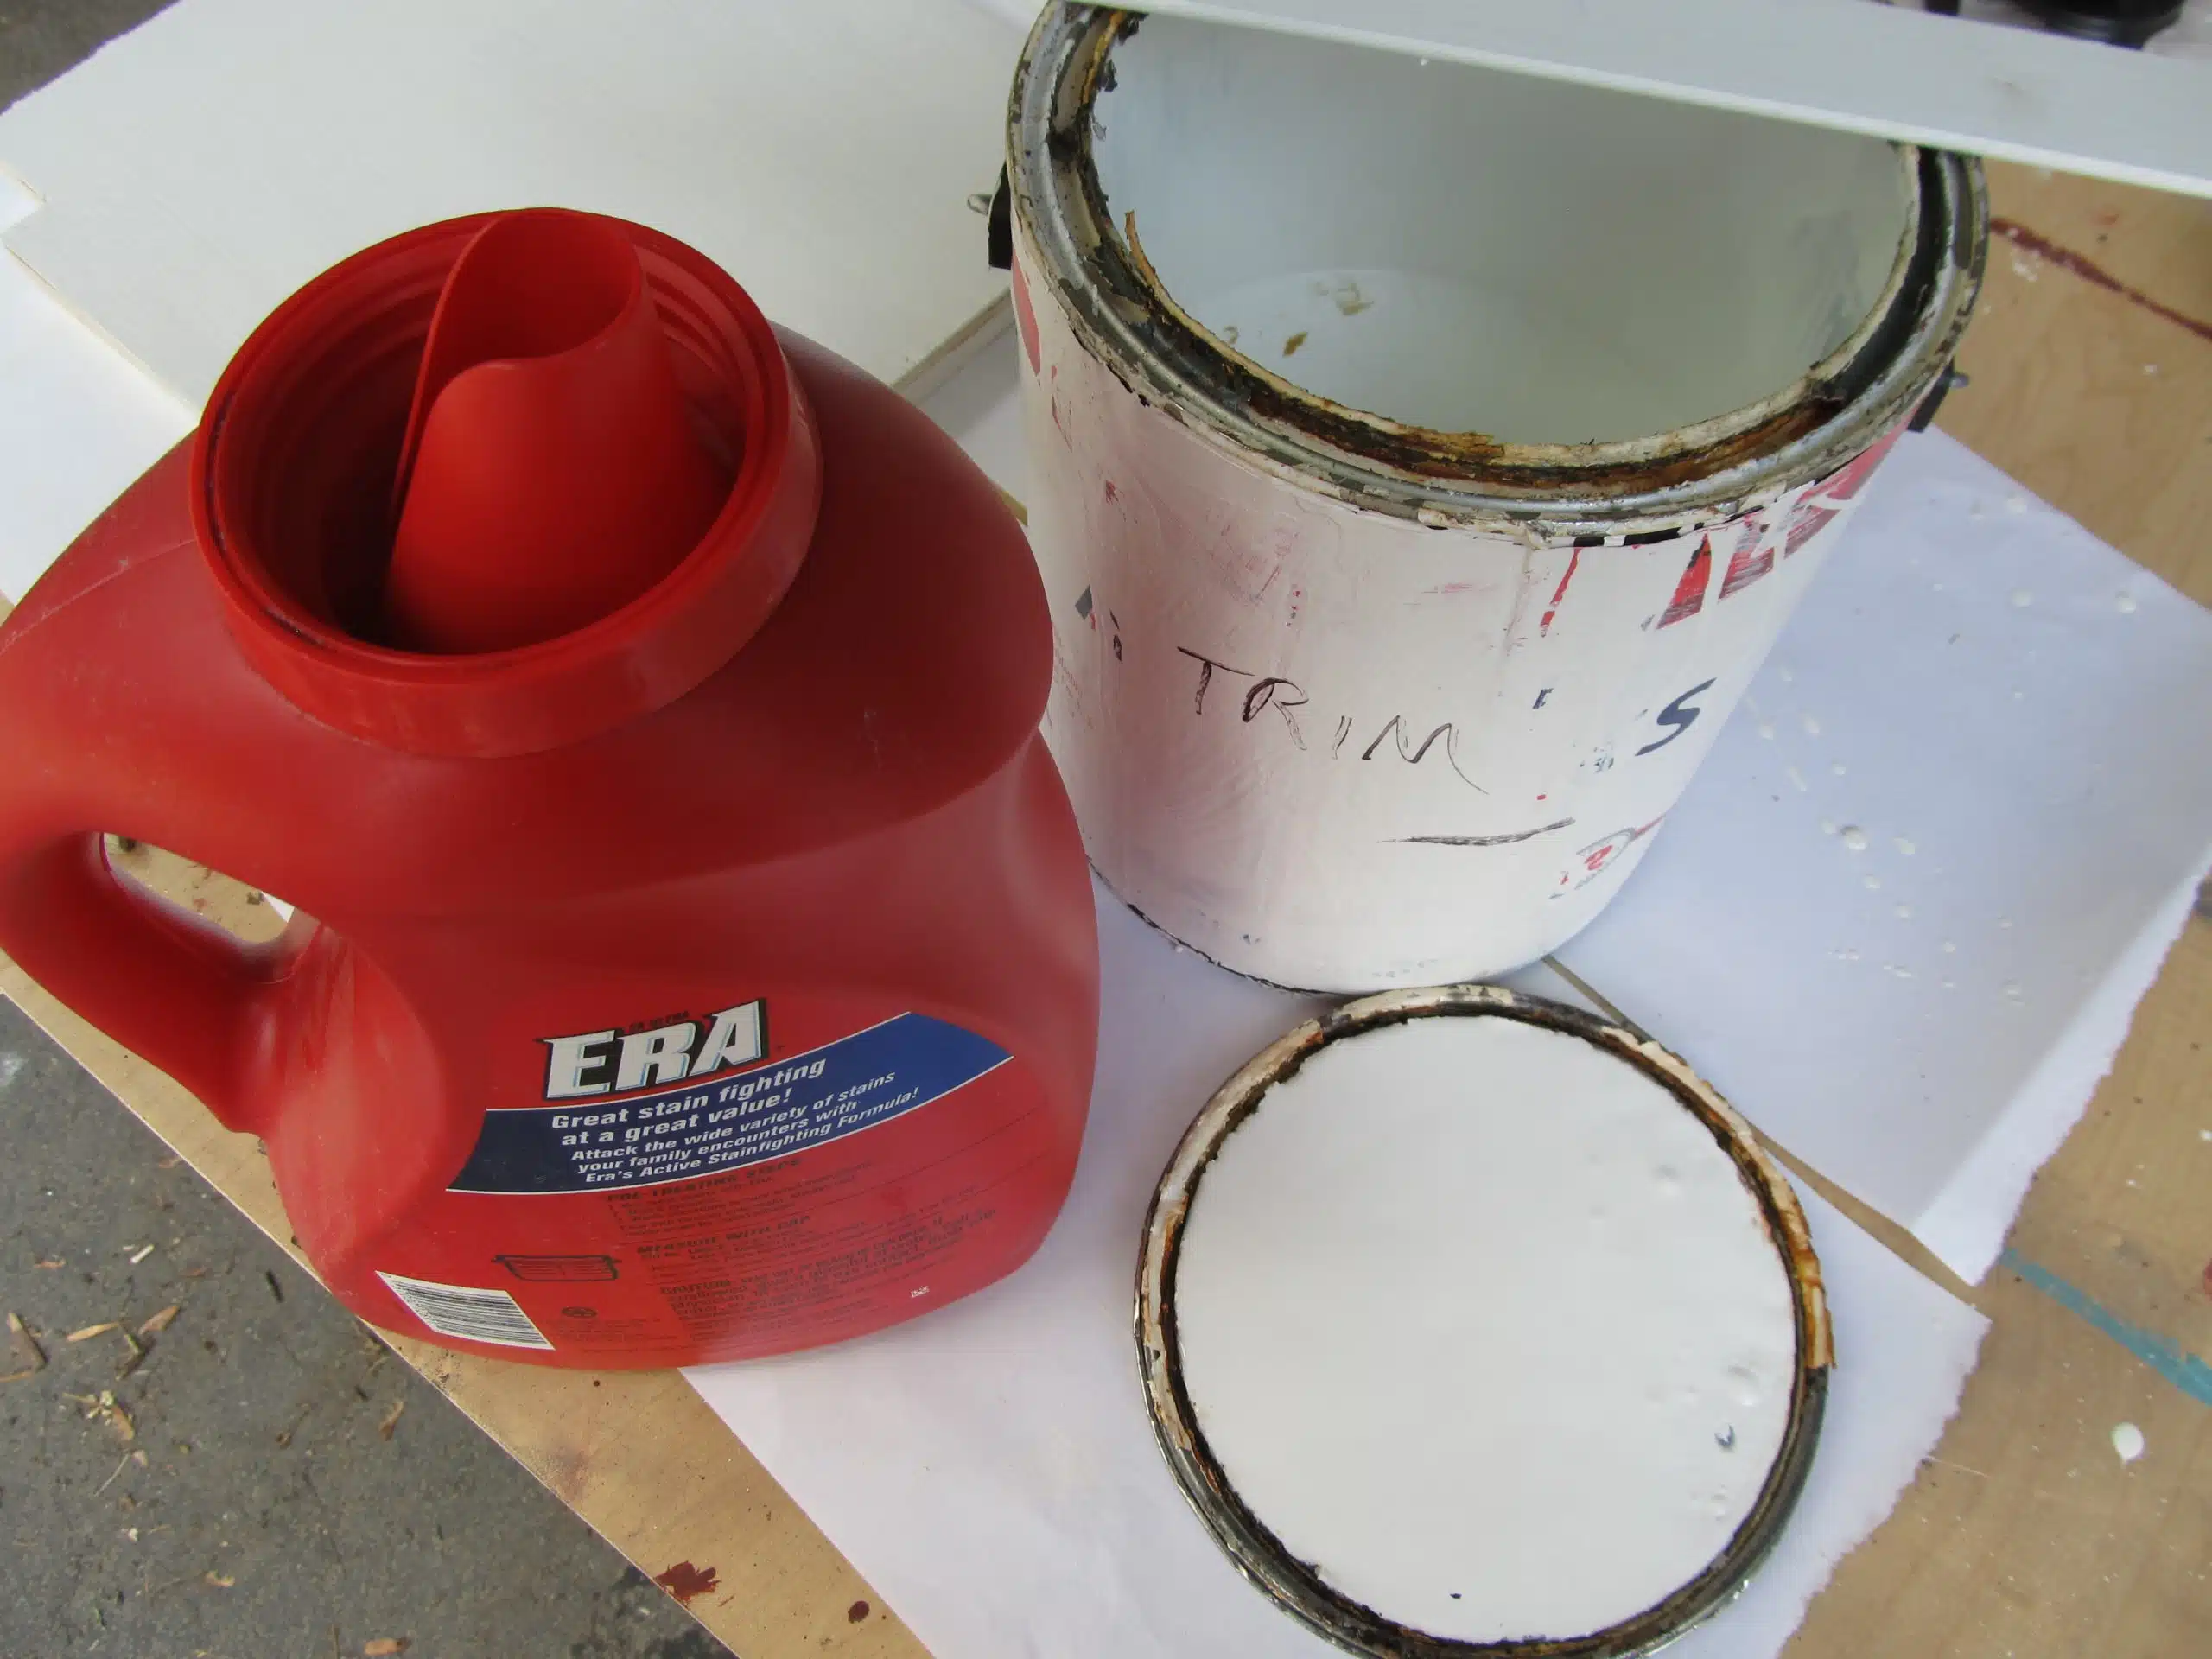 Reviews for BEHR 1 gal. Empty Plastic Paint Bucket with Pour Spout